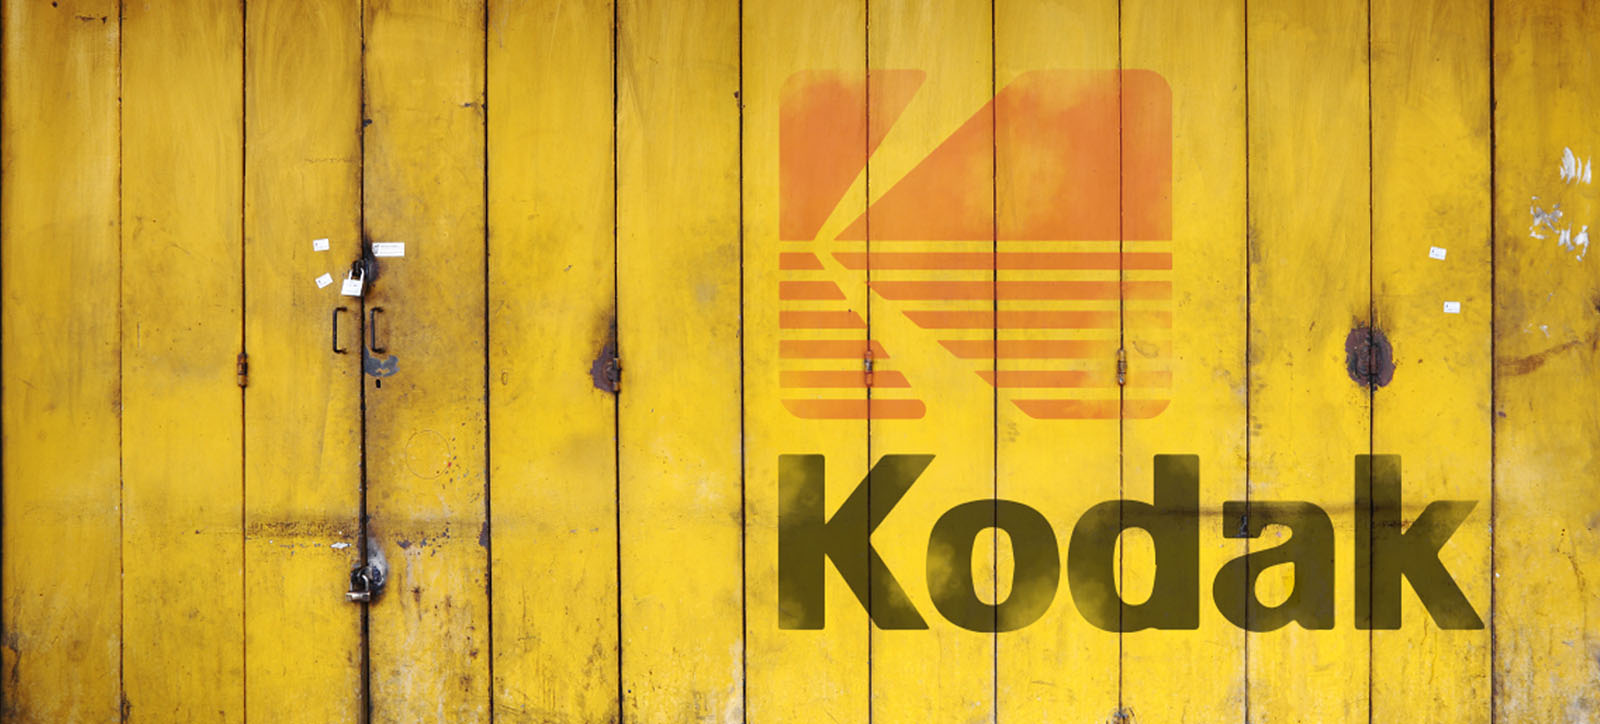 The fading Kodak logo